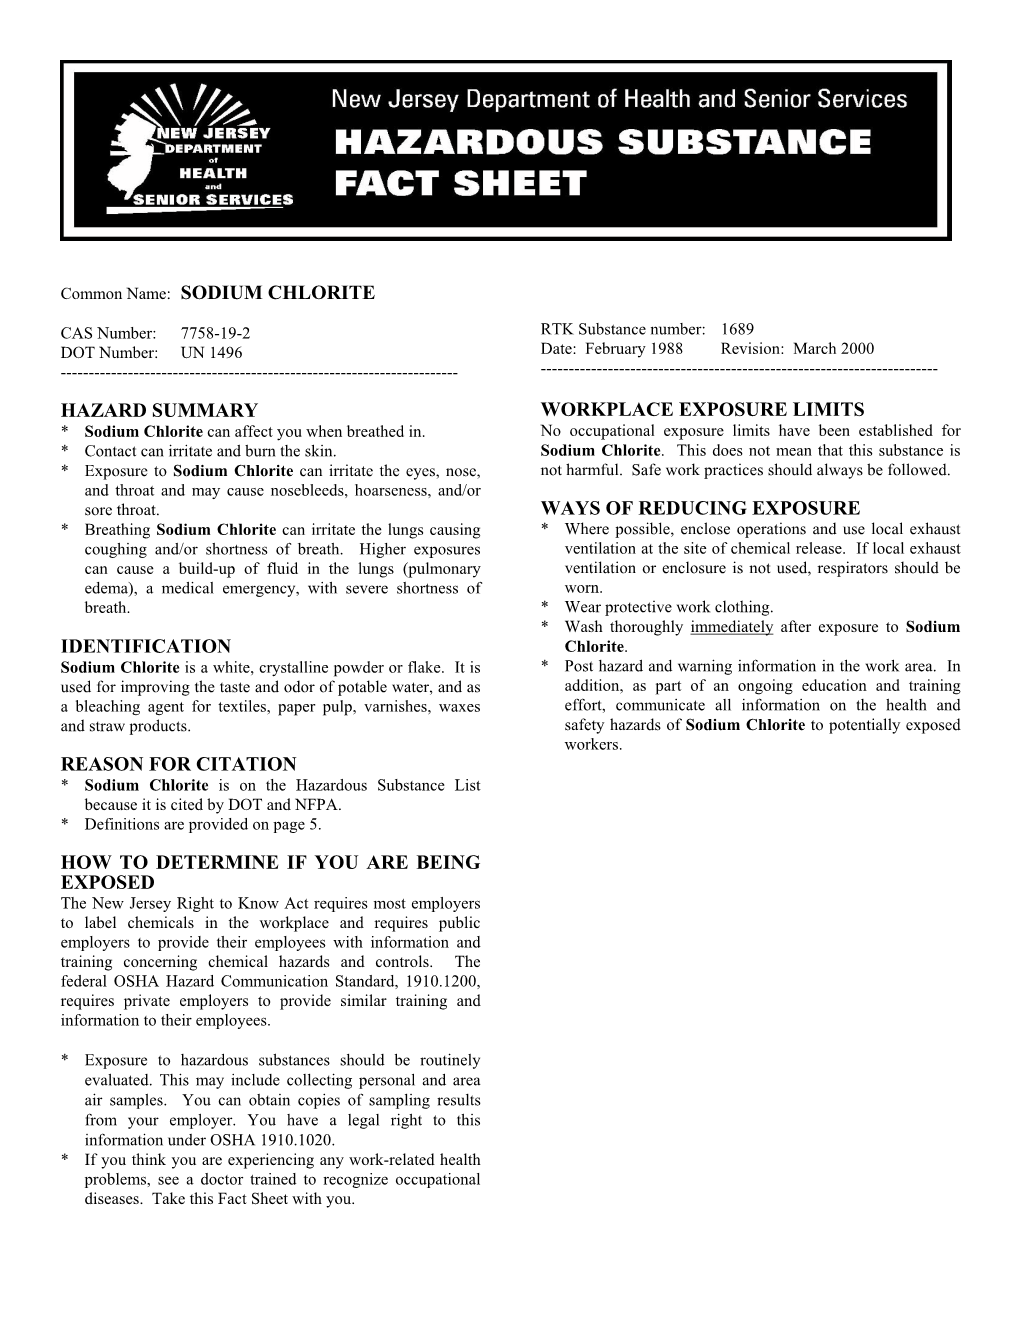 Sodium Chlorite Hazard Summary Identification